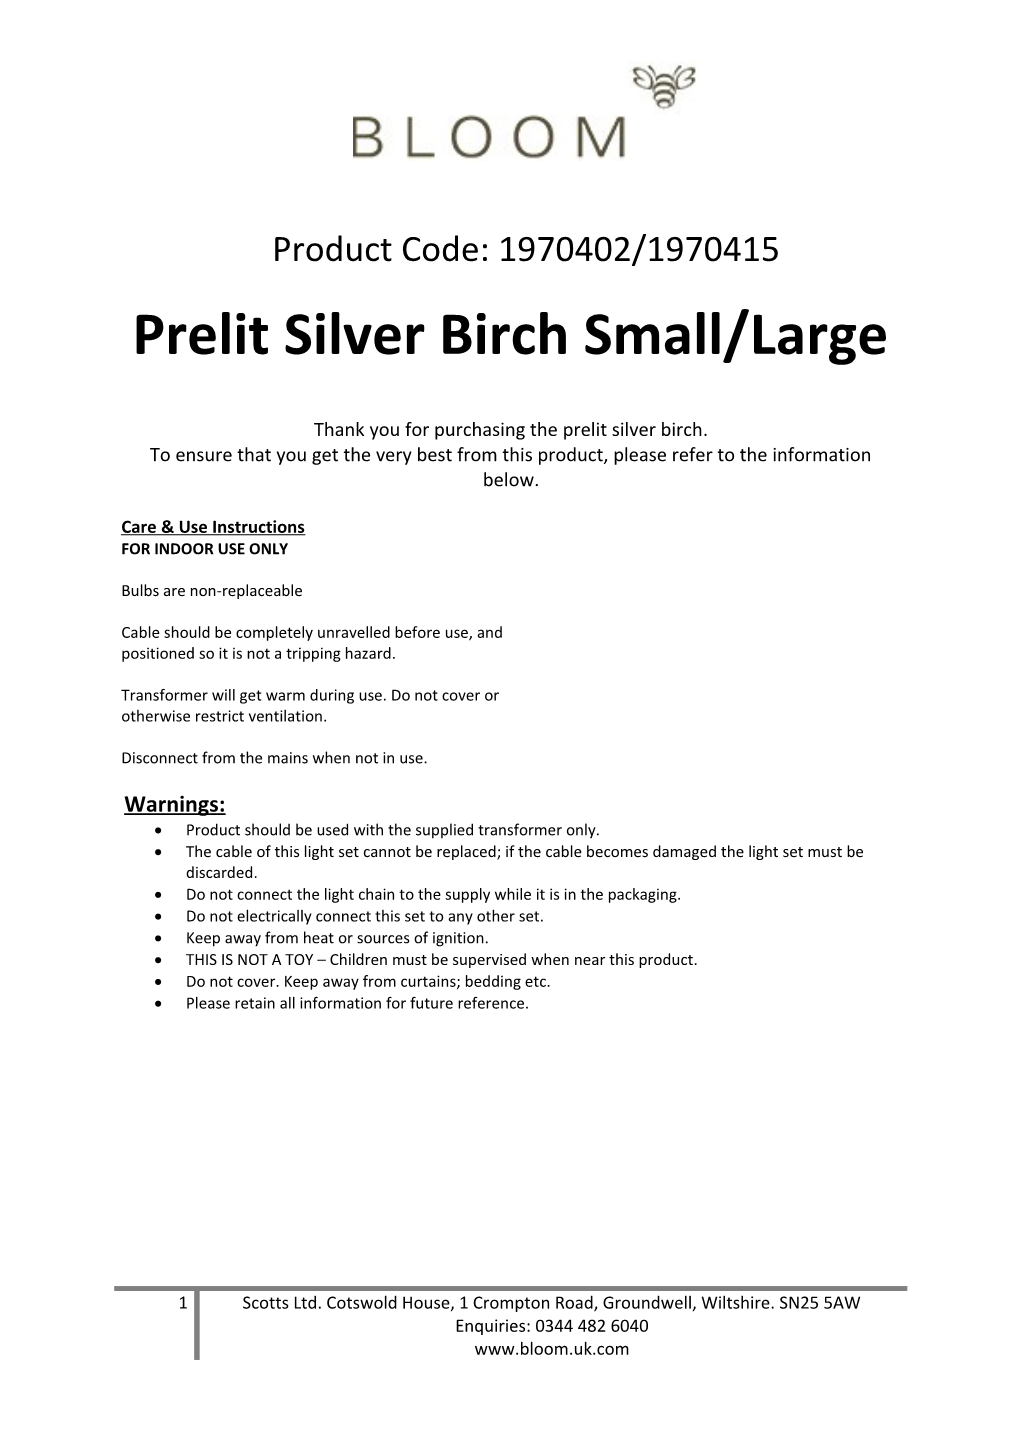 Prelit Silver Birch Small/Large